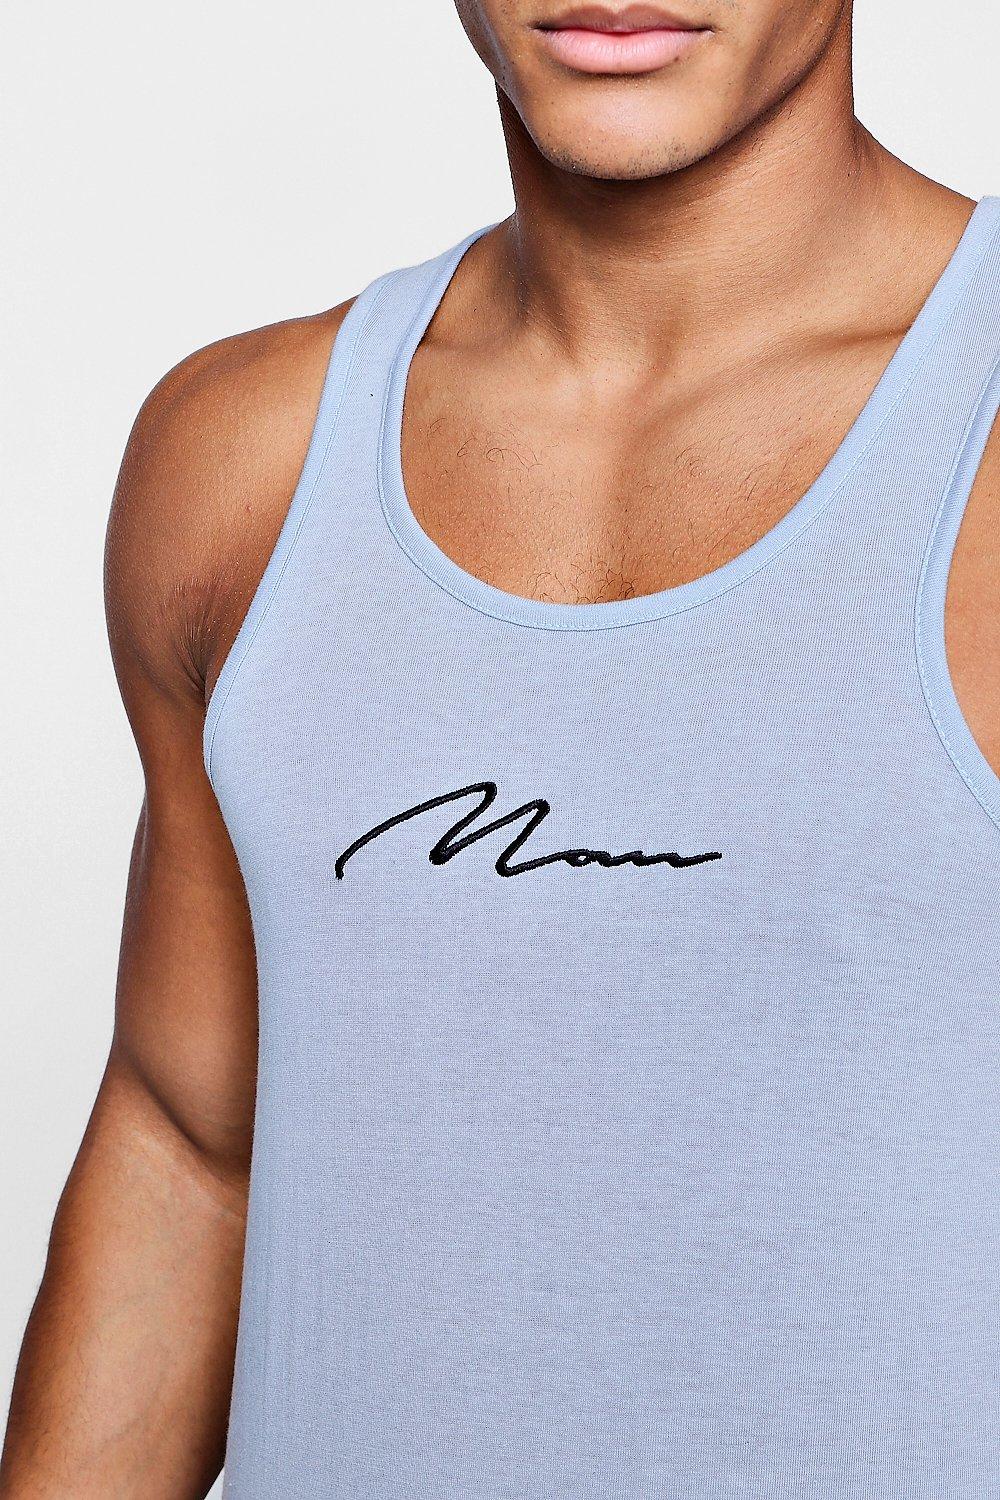 Camiseta marcada bordada de la marca “MAN”